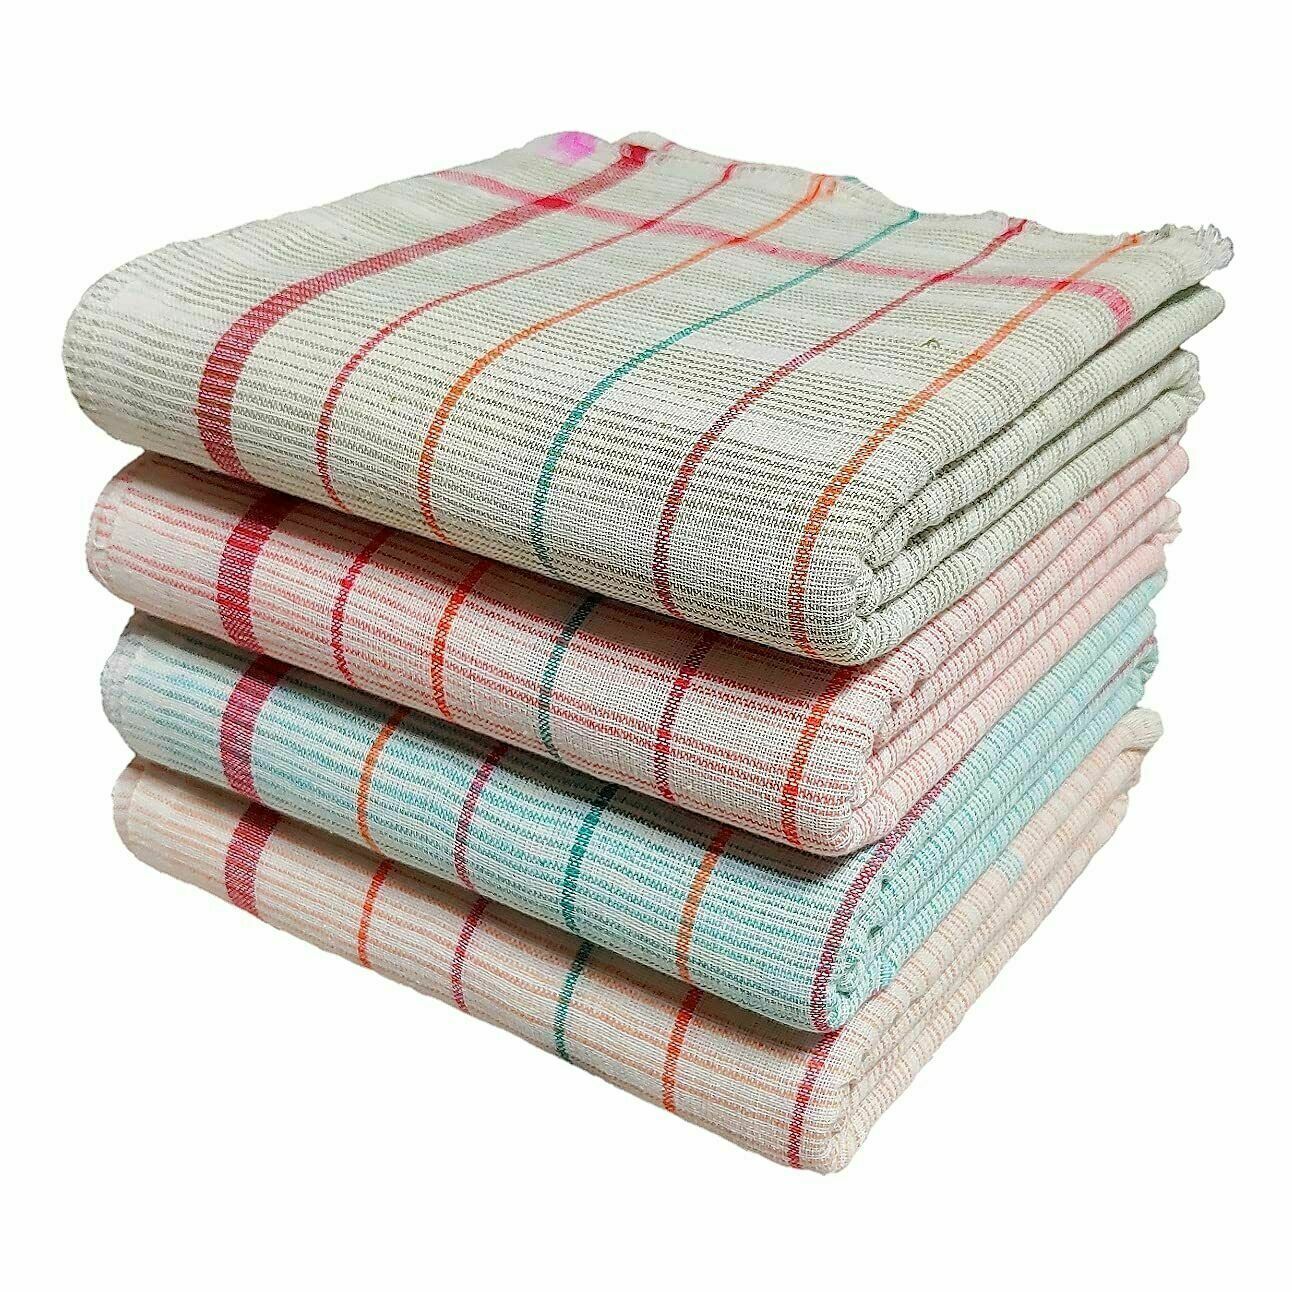 Cotton Bath Towels Gamcha 31 X 65 Inch Pack of 4 US